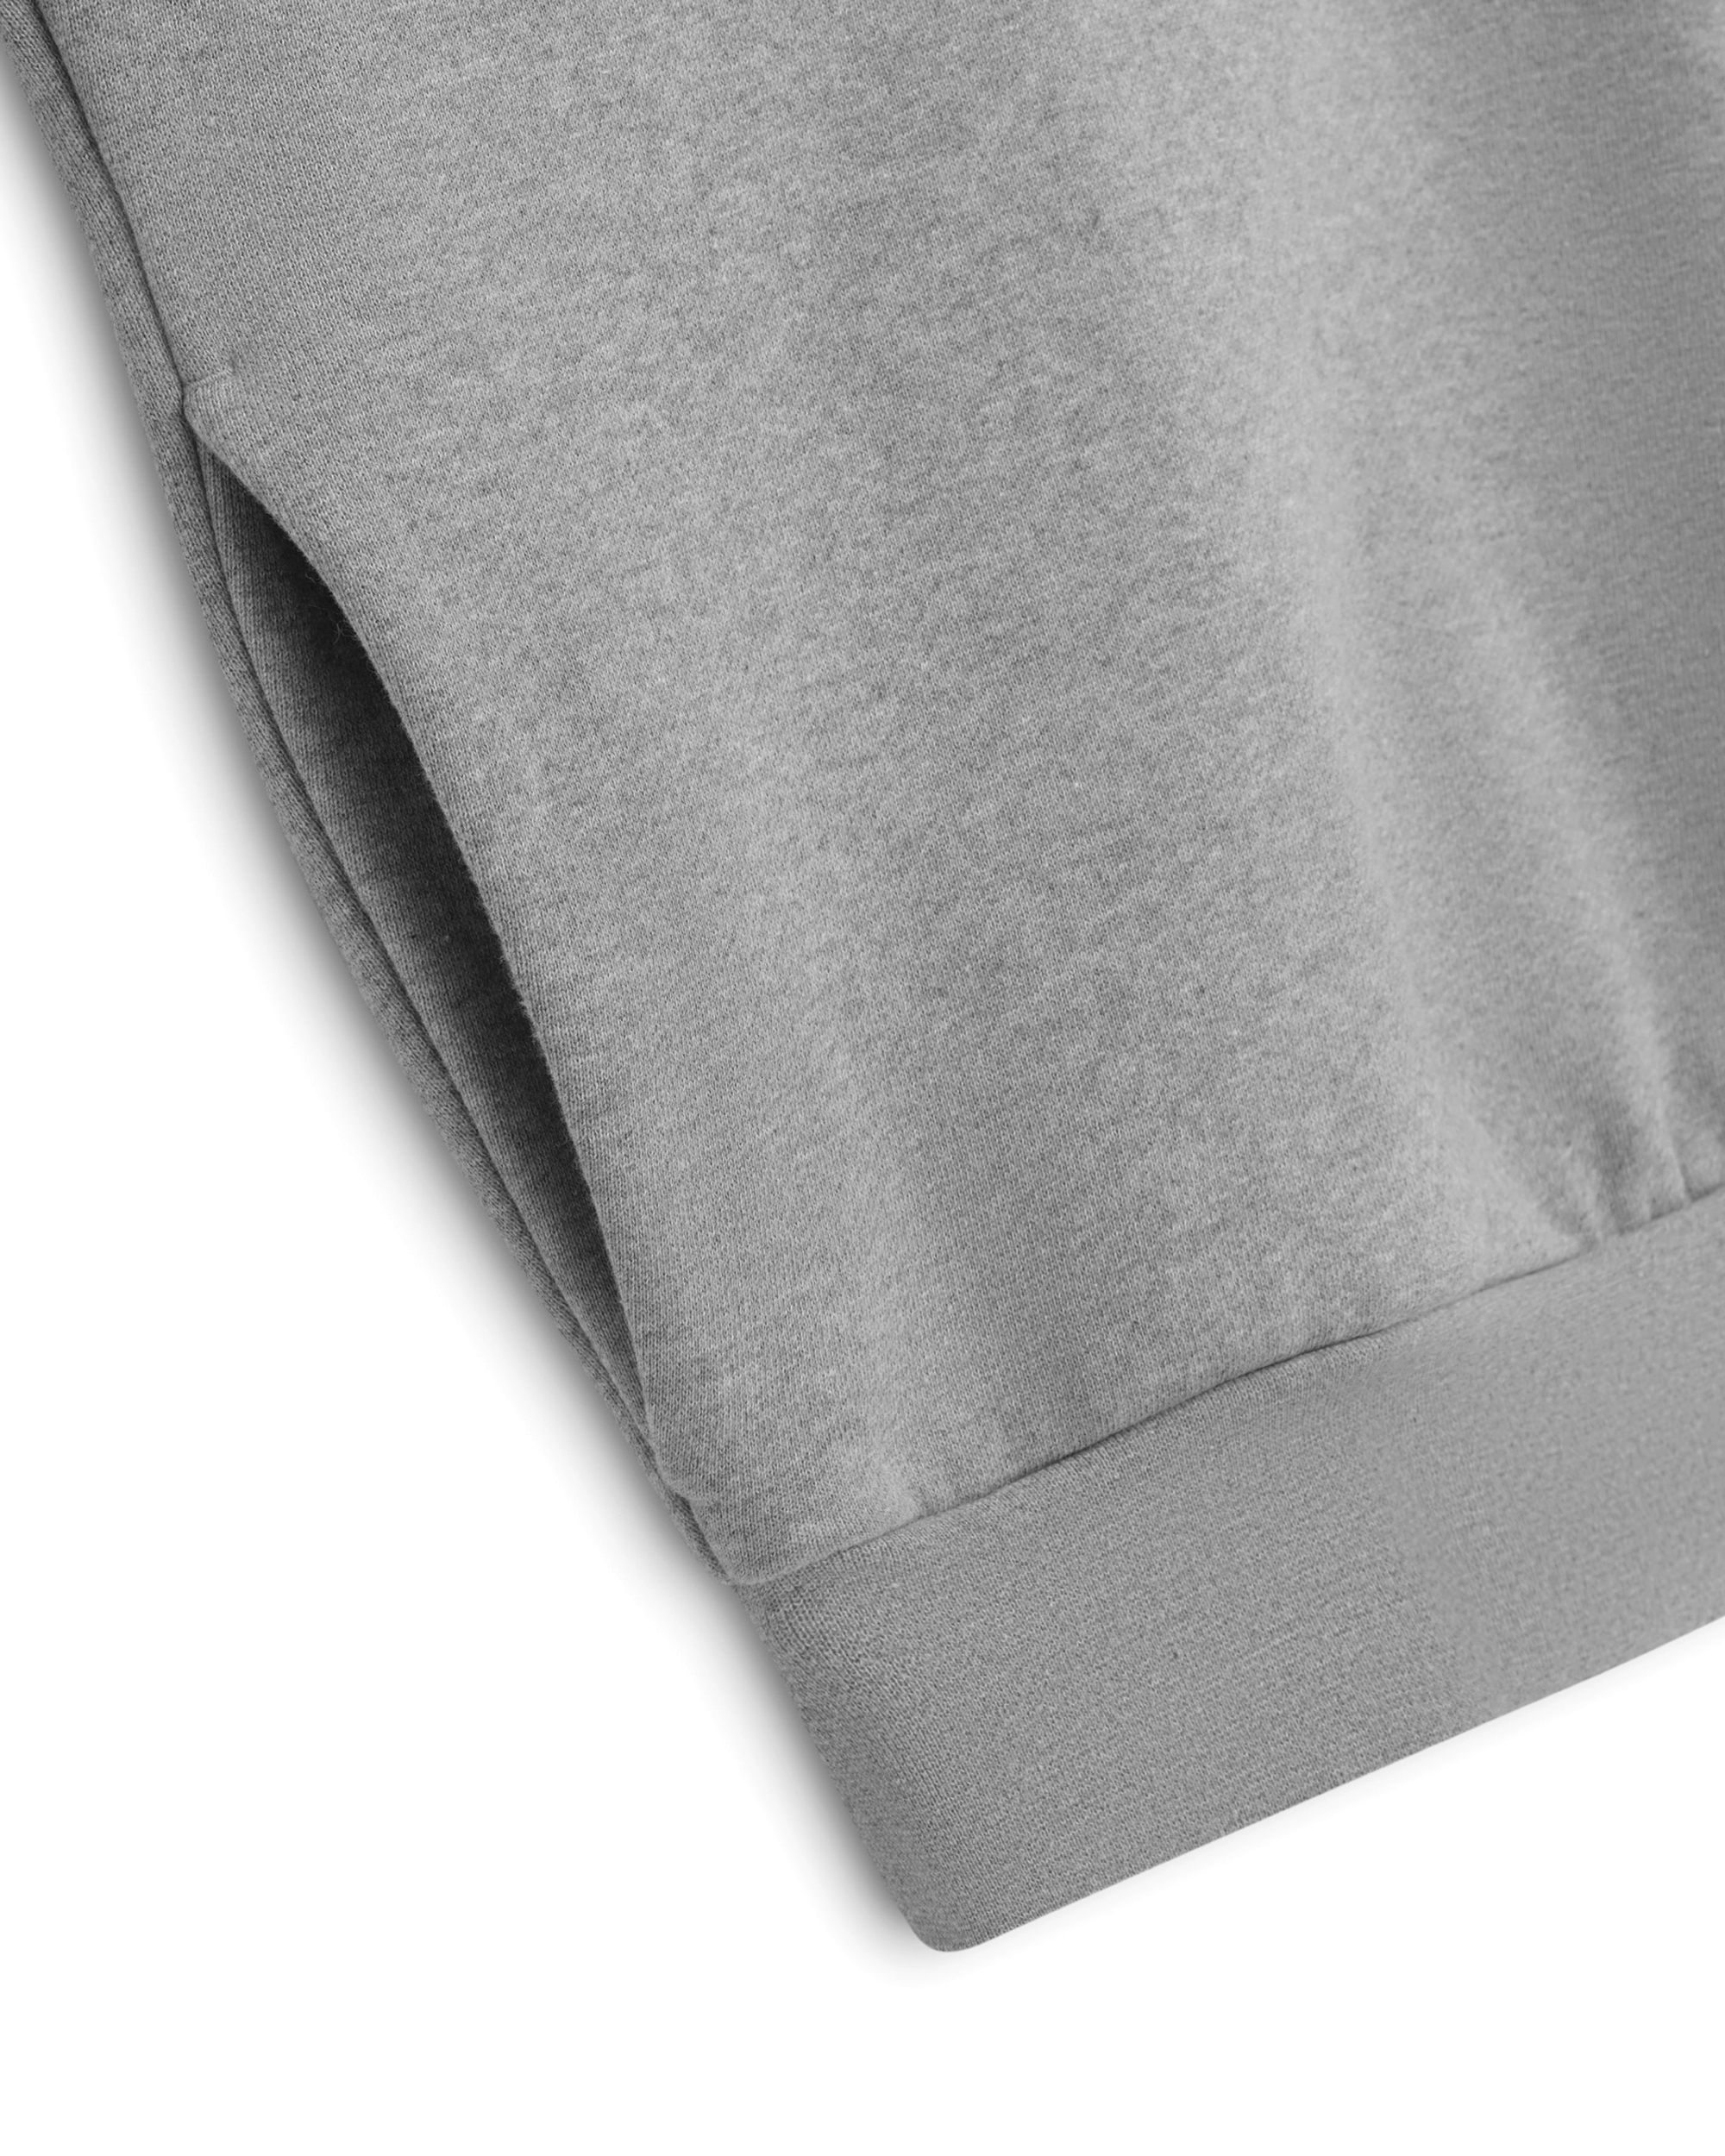 Essentials Hooded Sweatshirt - Dark Heather Oatmeal